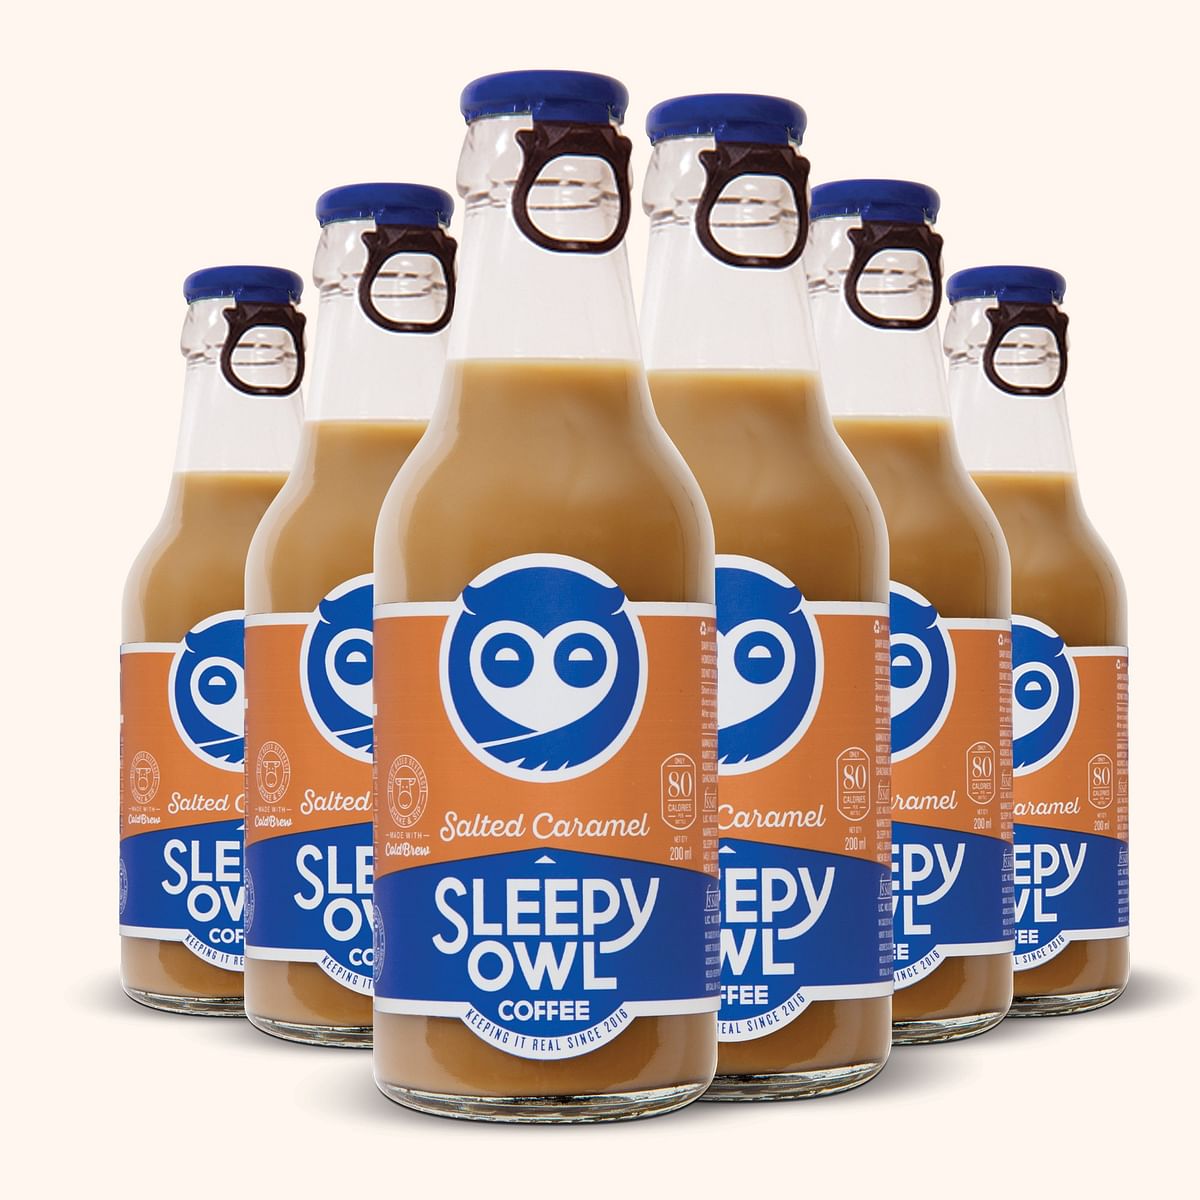 Sleepy Owl's Cold Coffee